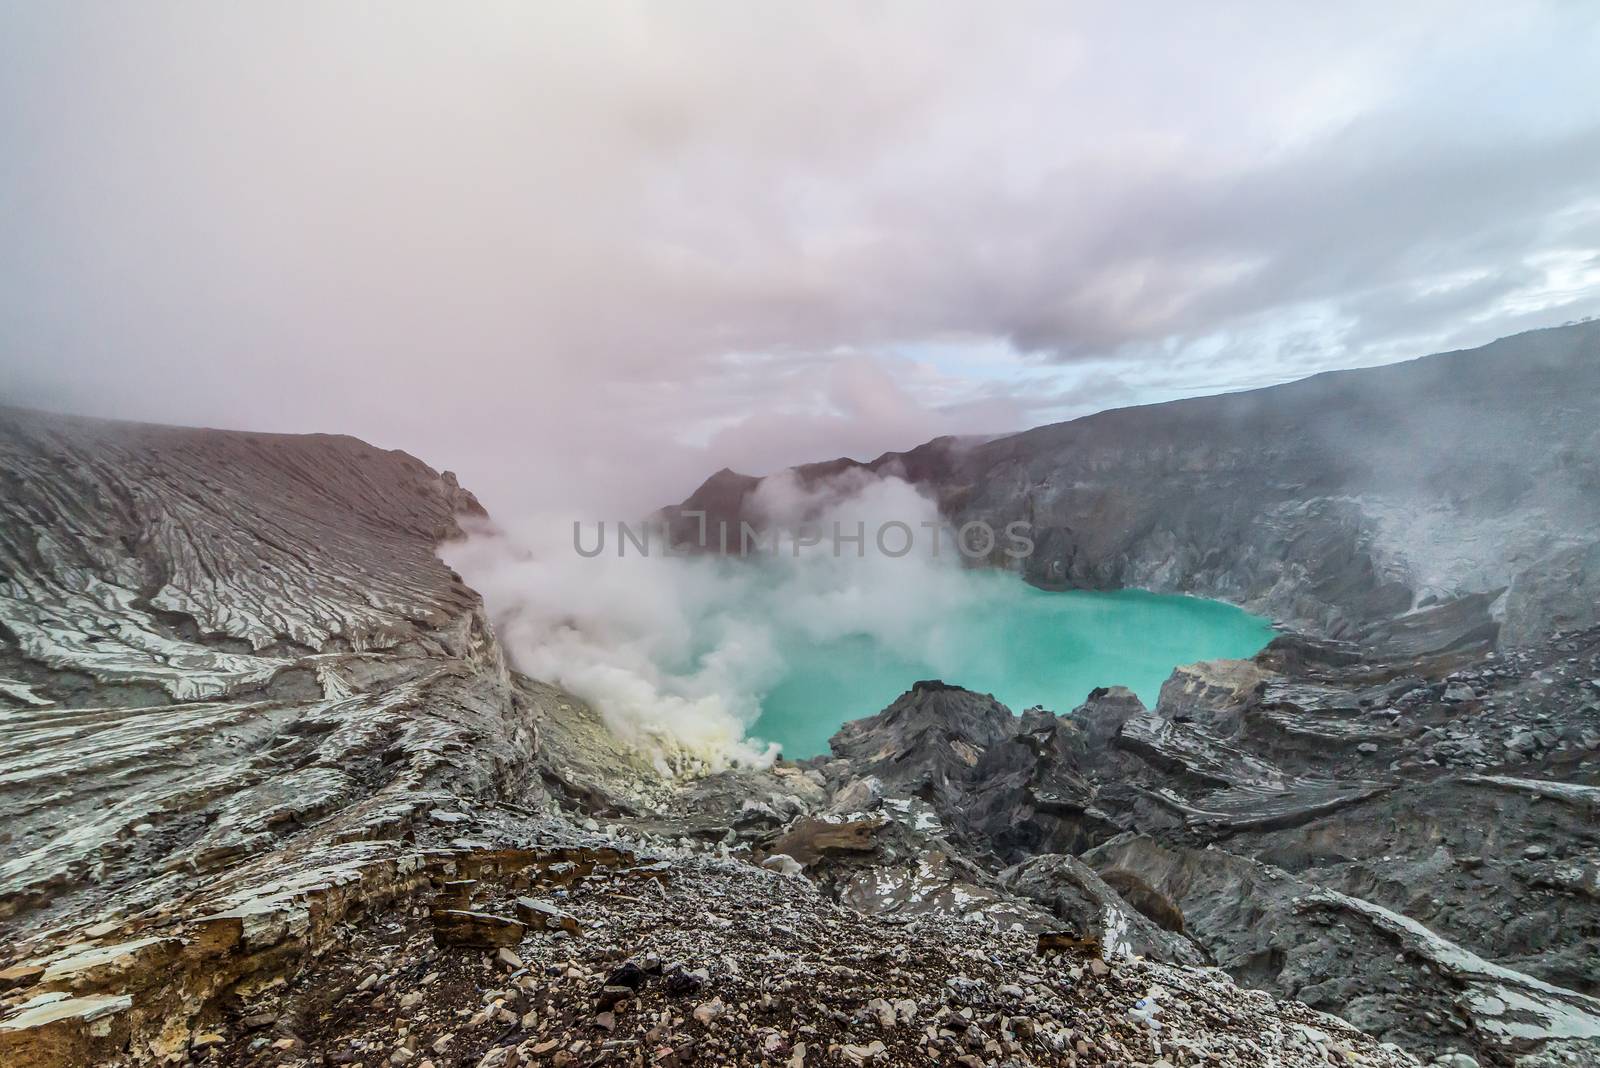 Kawah Ijen Volcano is a stratovolcano in the Banyuwangi Regency of East Java, Indonesia.